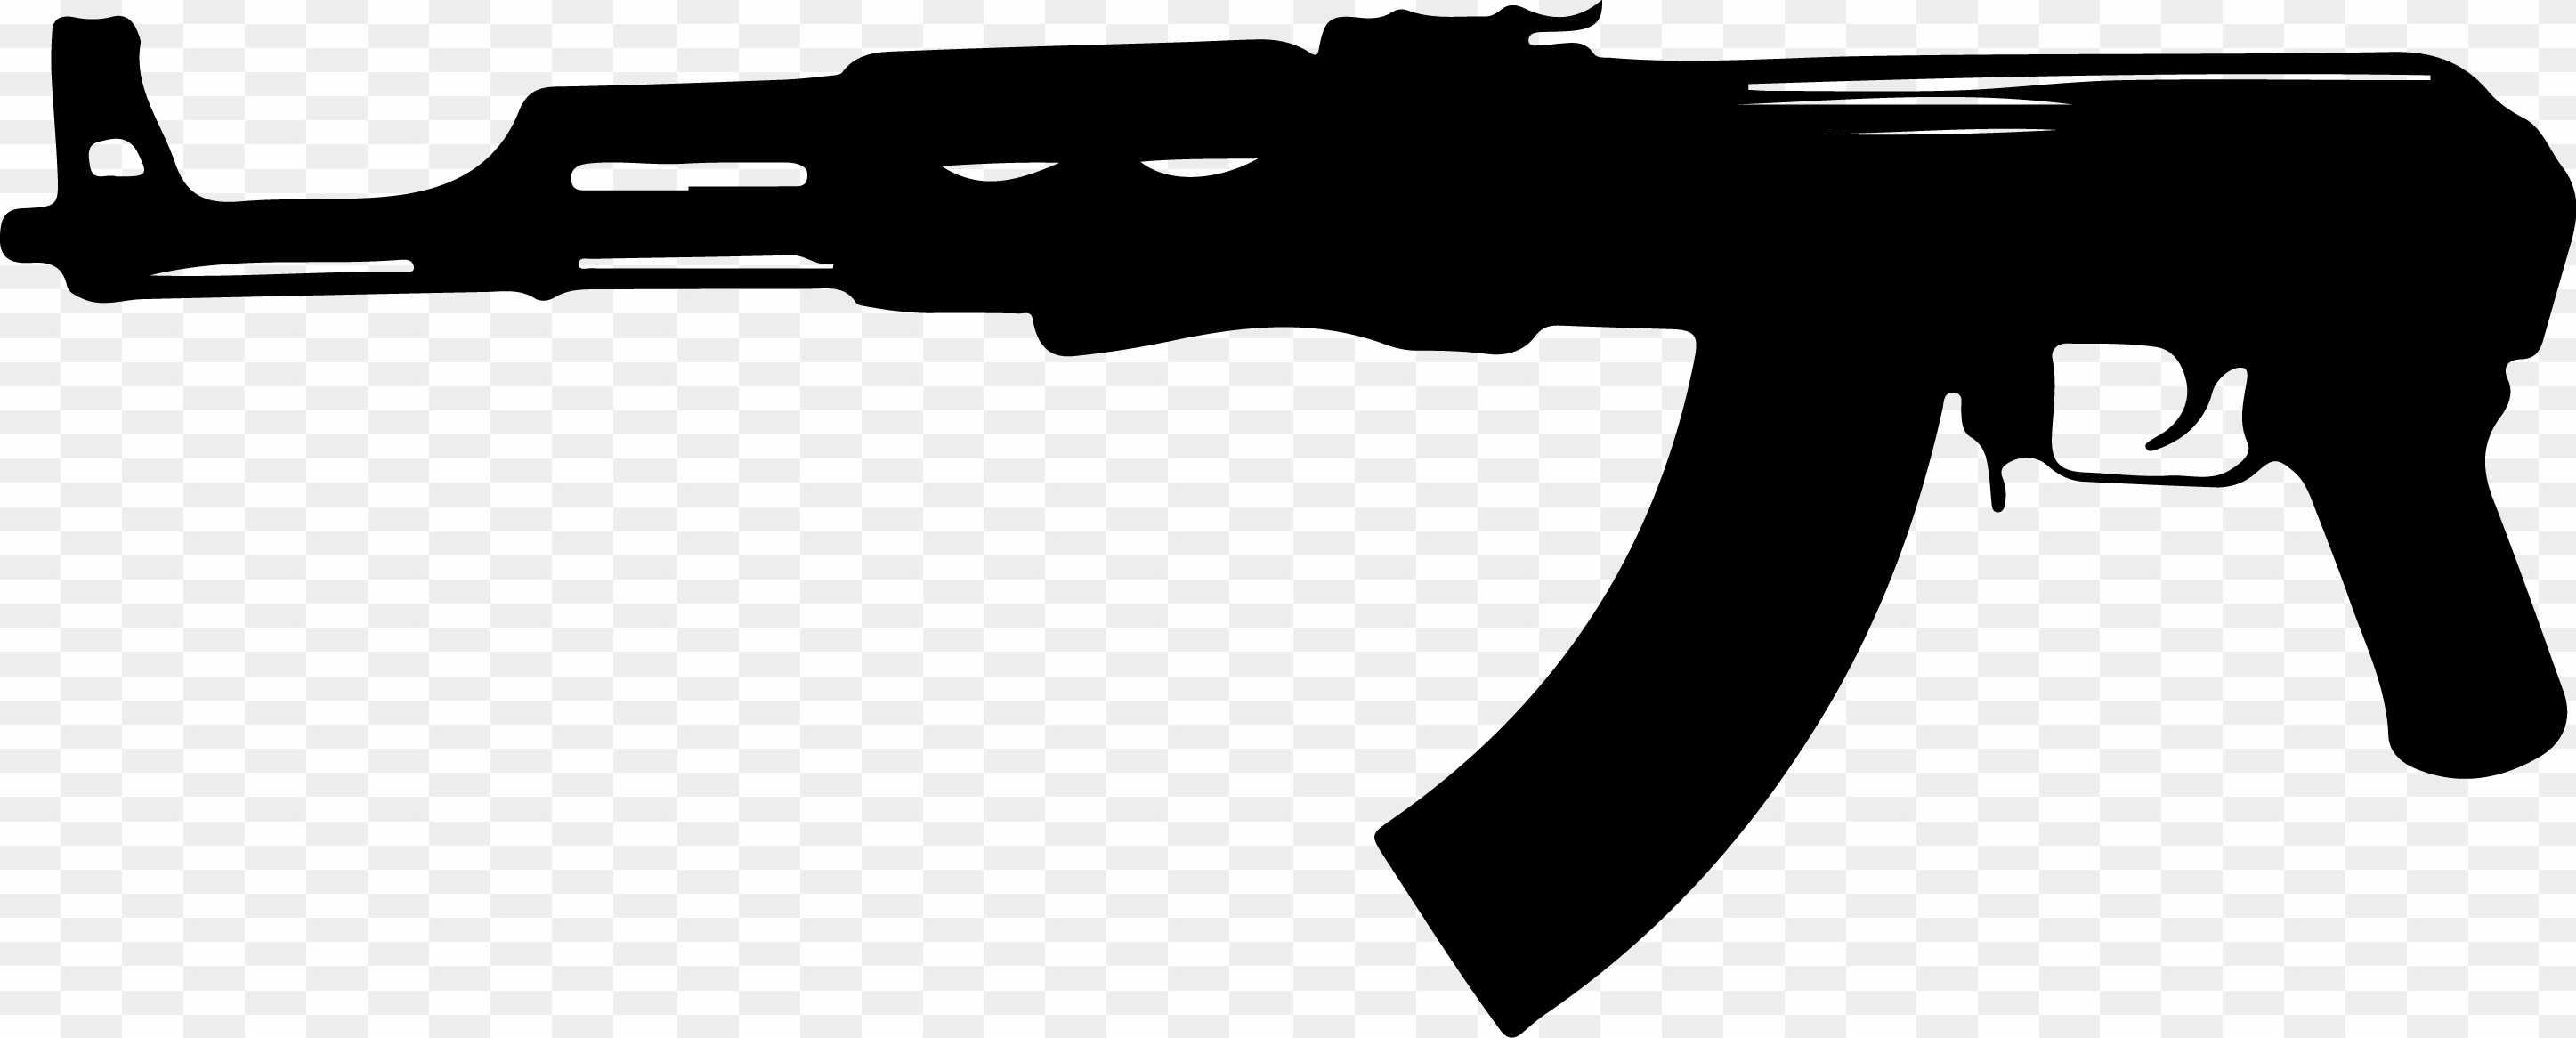 AK 47 PNG transparent images